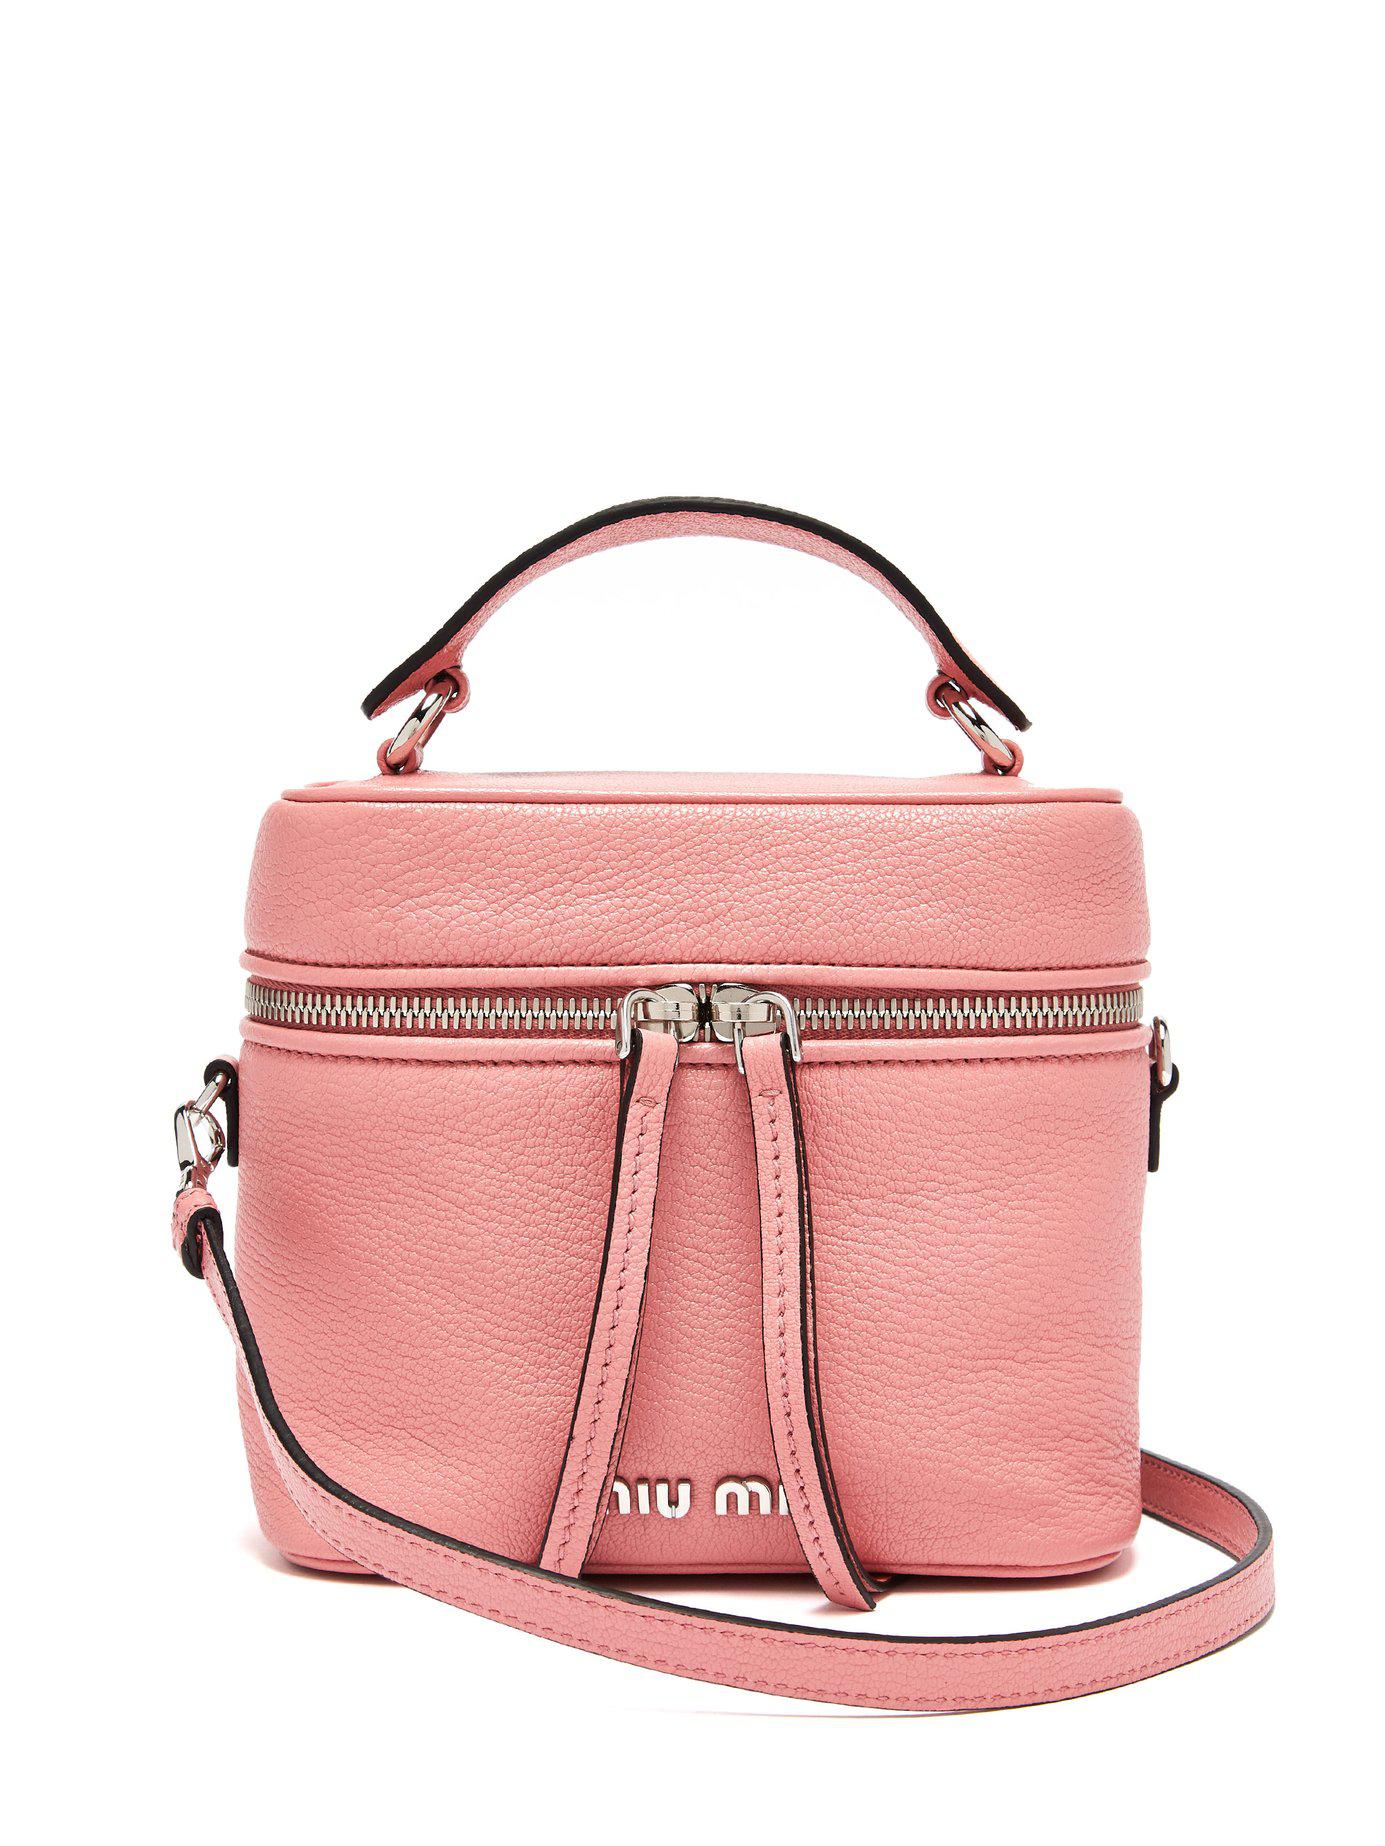 Miu Miu Leather Cross Body Beauty Case in Pink Lyst